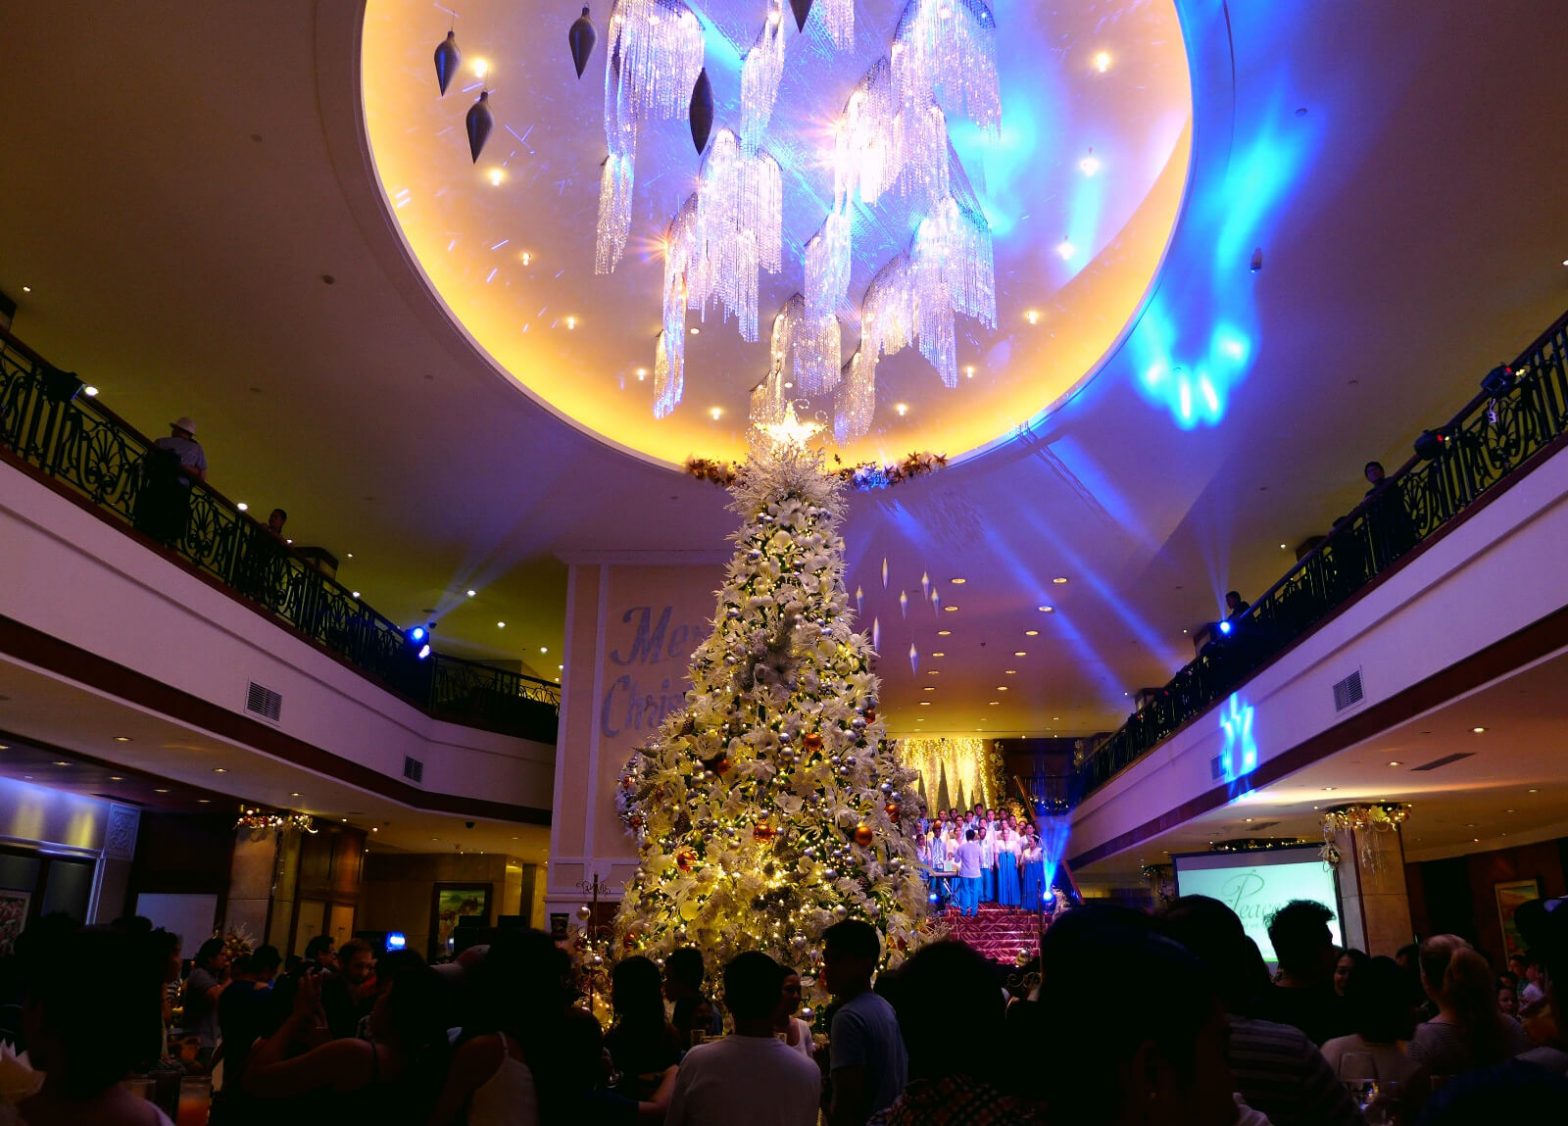 Marco Polo Plaza Cebu lights up Tree of Hope to mark start of ‘Festive Season’